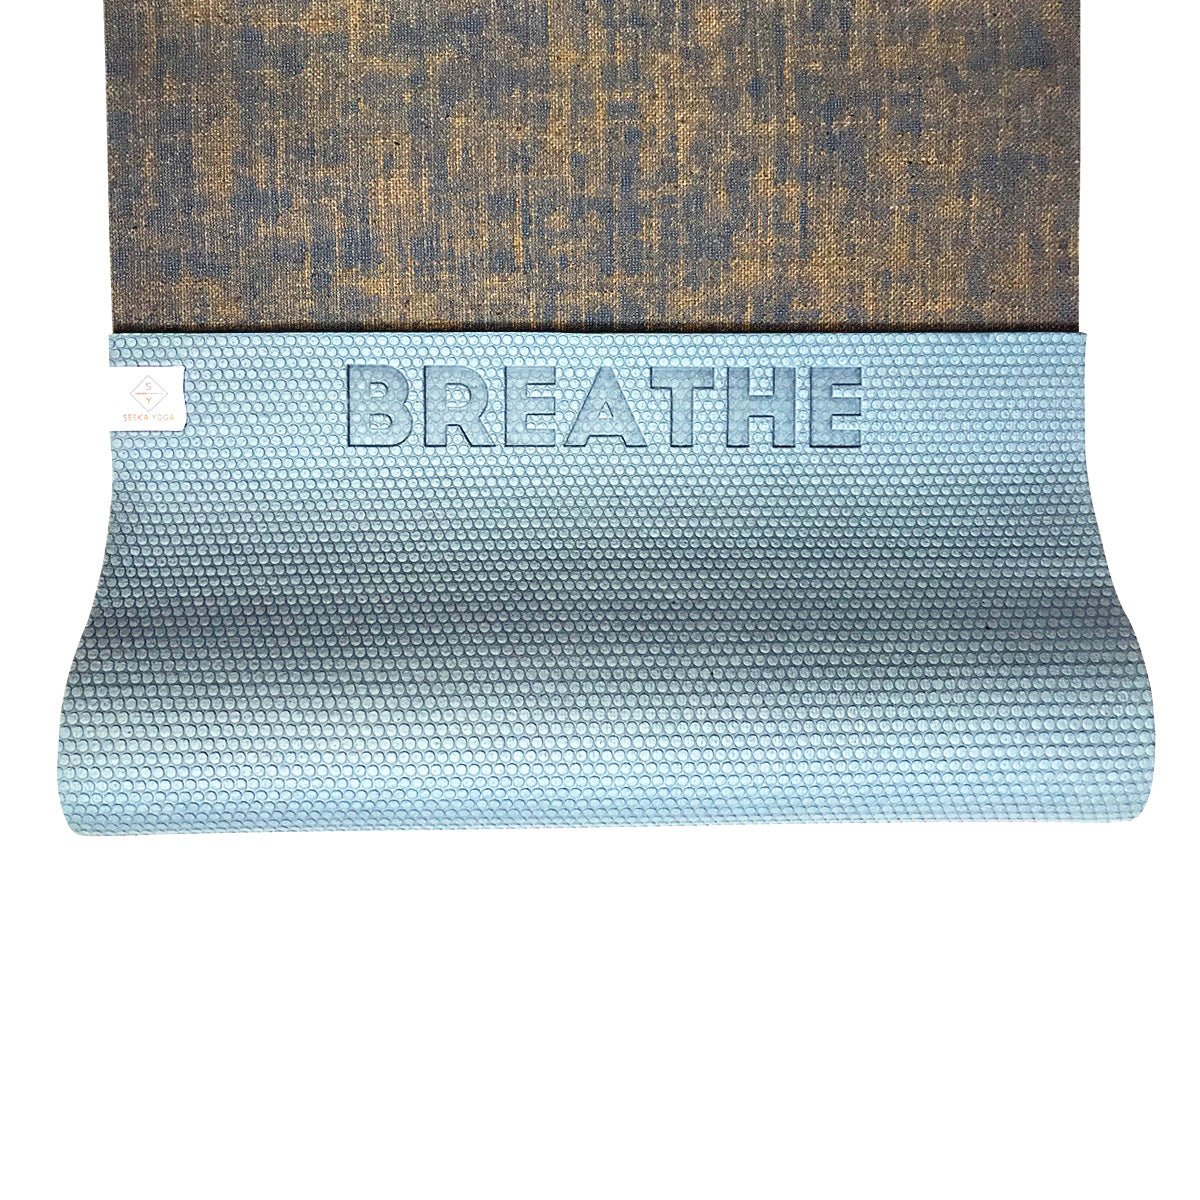 FOILLER Premium Natural Jute Yoga Mat. Organic & Eco Friendly. Non Slip -  Standard Size (71 x 24 x 5mm) for Women and Men, Workout Mat for Yoga